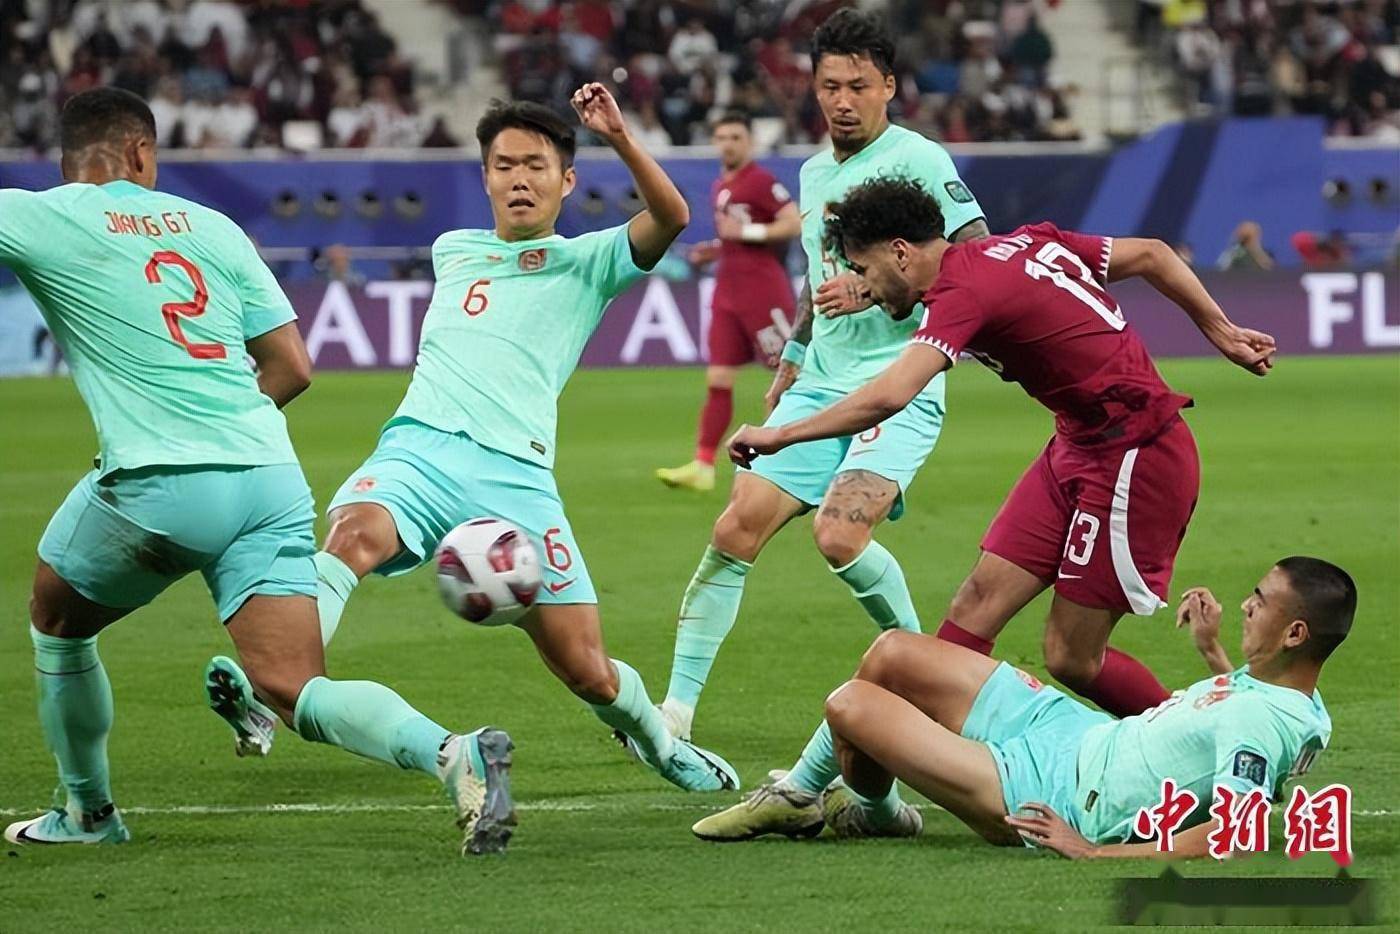 【168sports】三场小组赛一球未进，国足亚洲杯出线希望渺茫